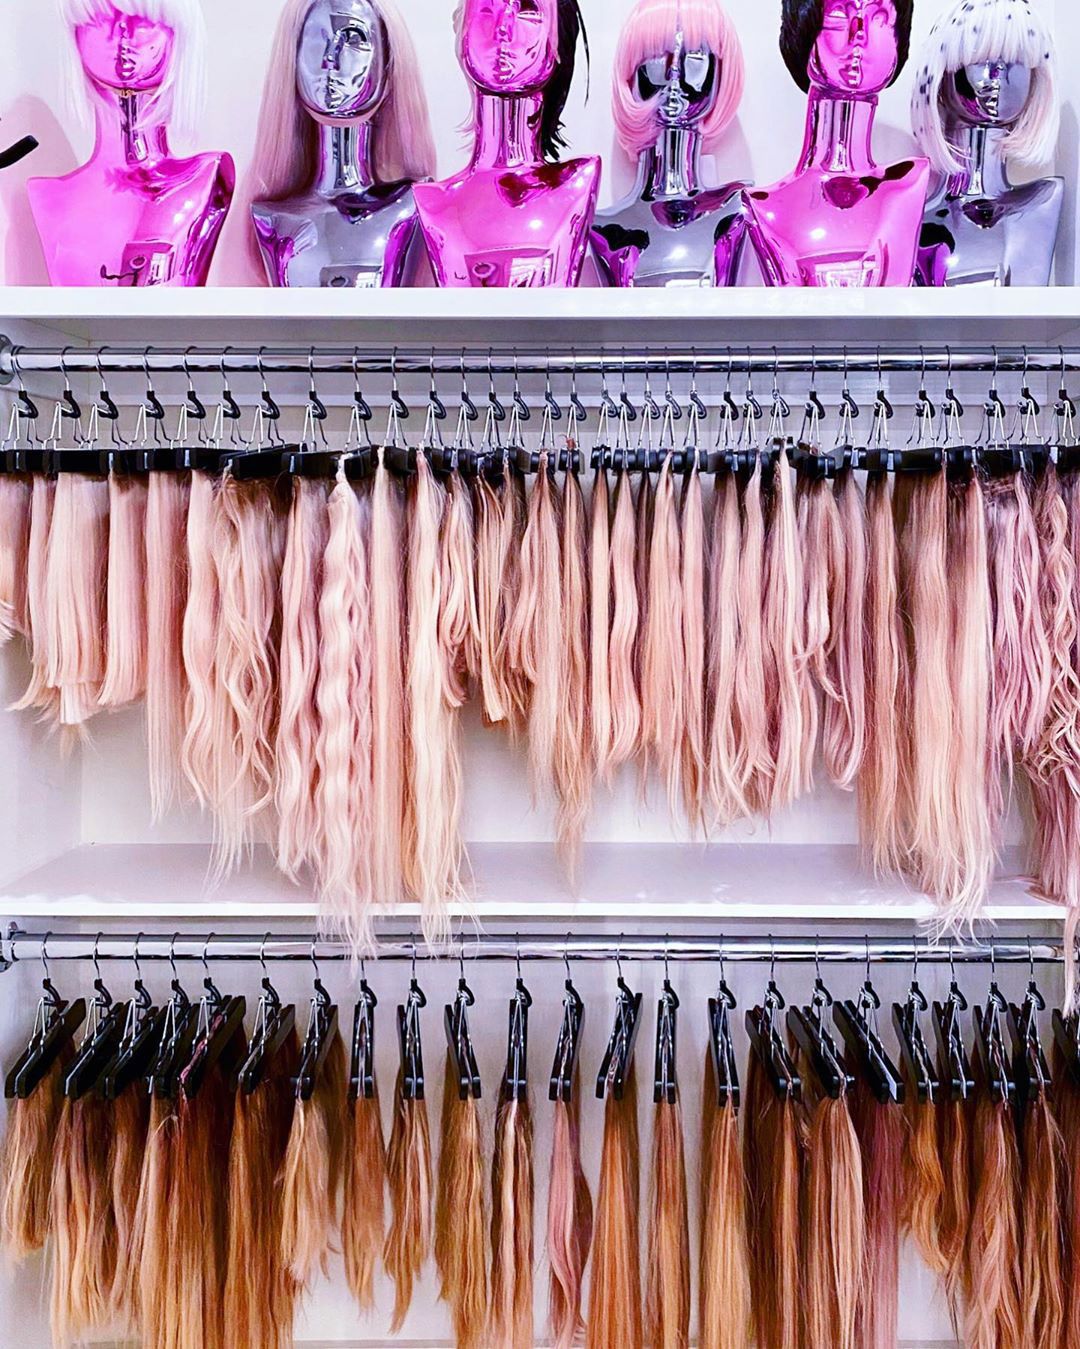 Kris Jenner's Walk-In Closet Includes an Impressive Purse